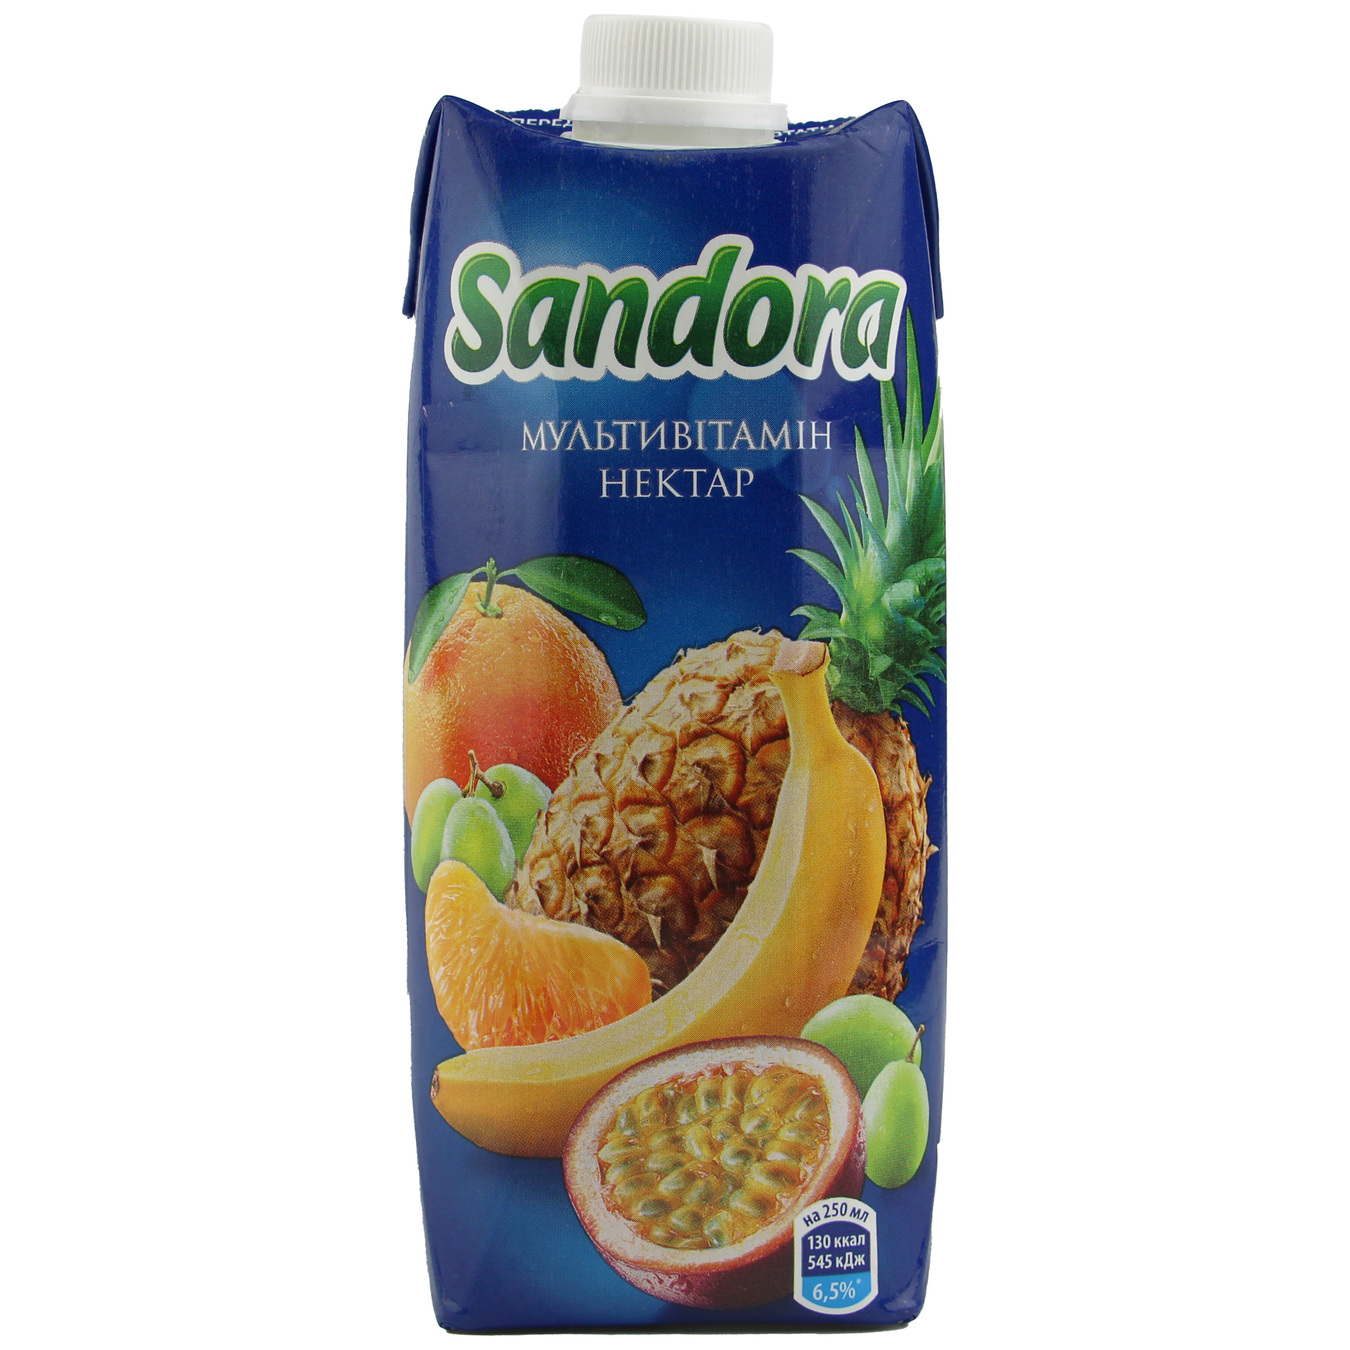 Sandora Multivitamin Nectar 0,5l